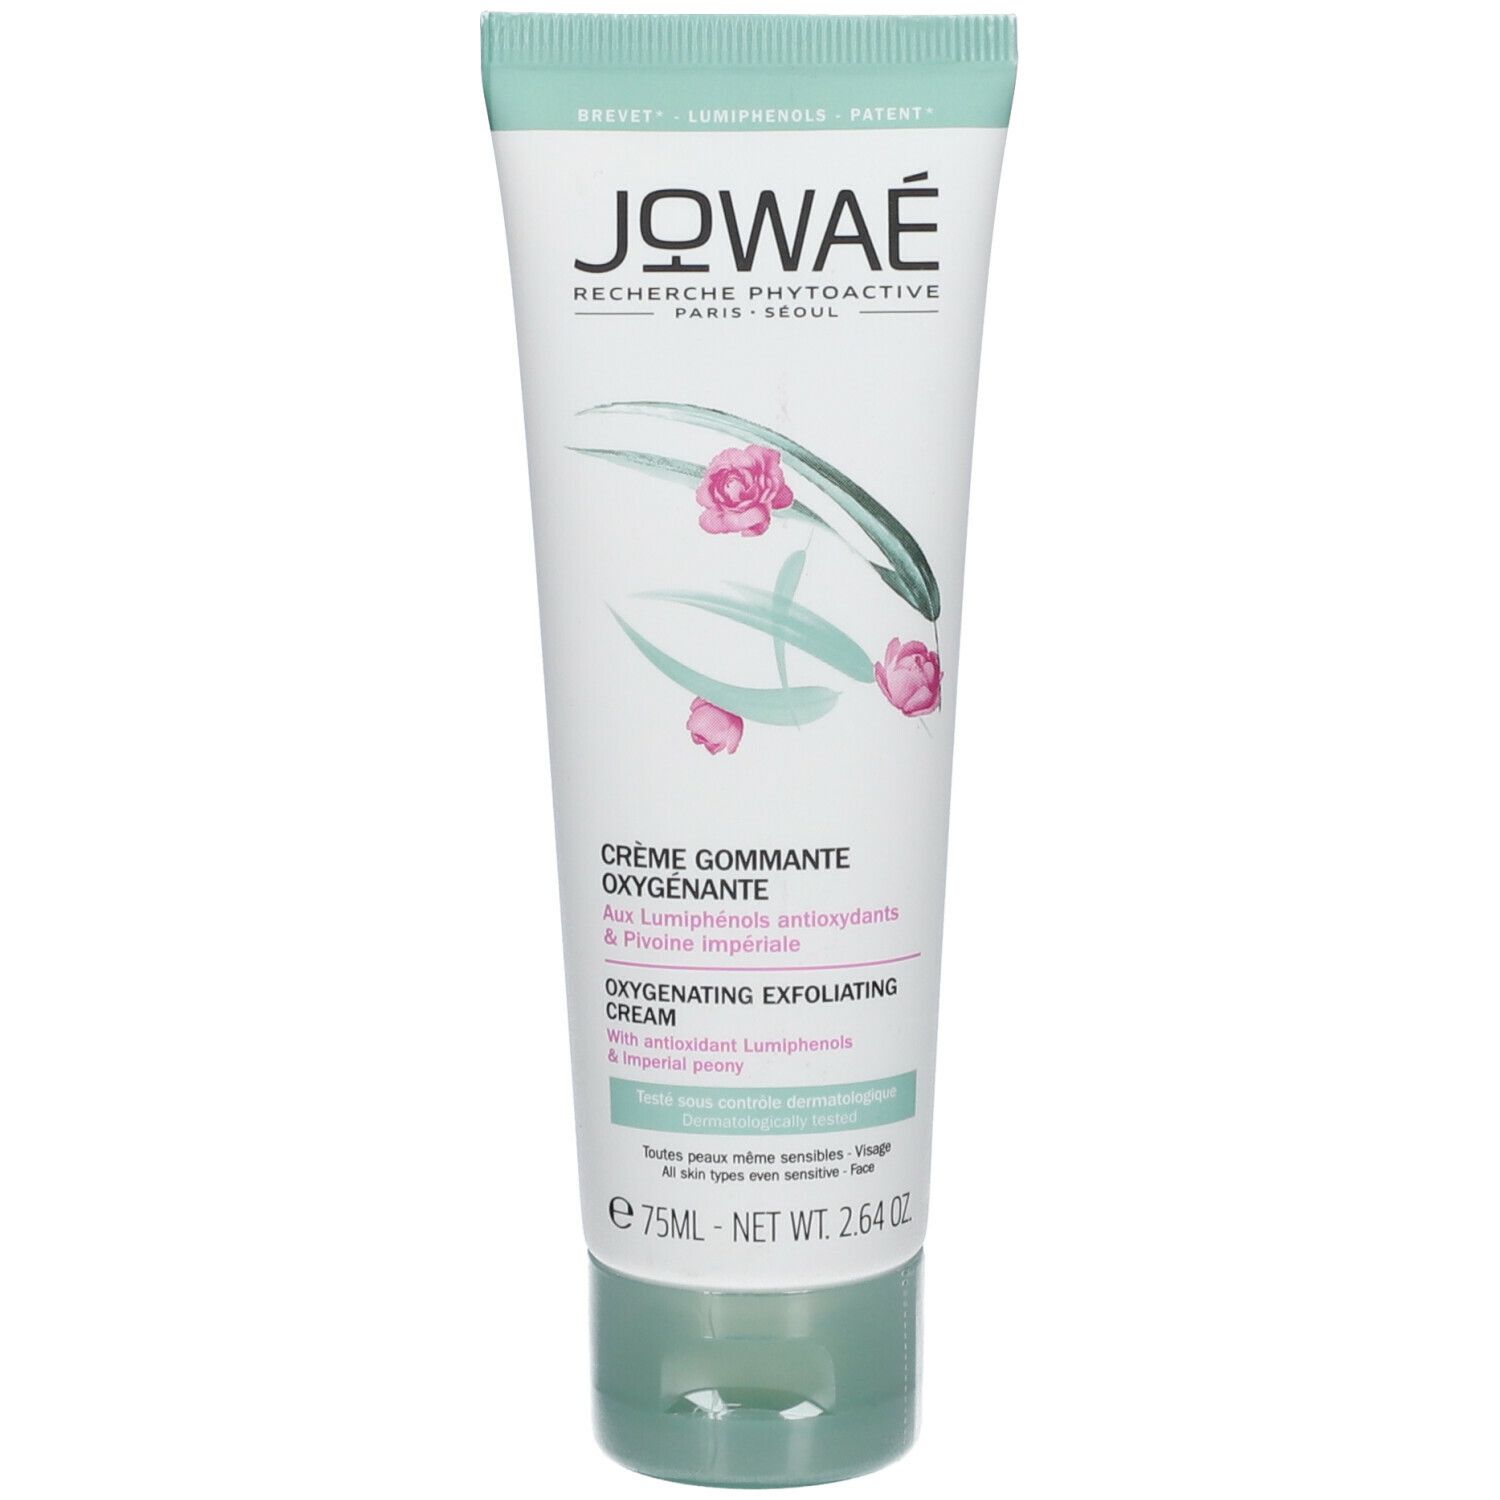 JOWAE Sauerstoffhaltige Peeling-Creme